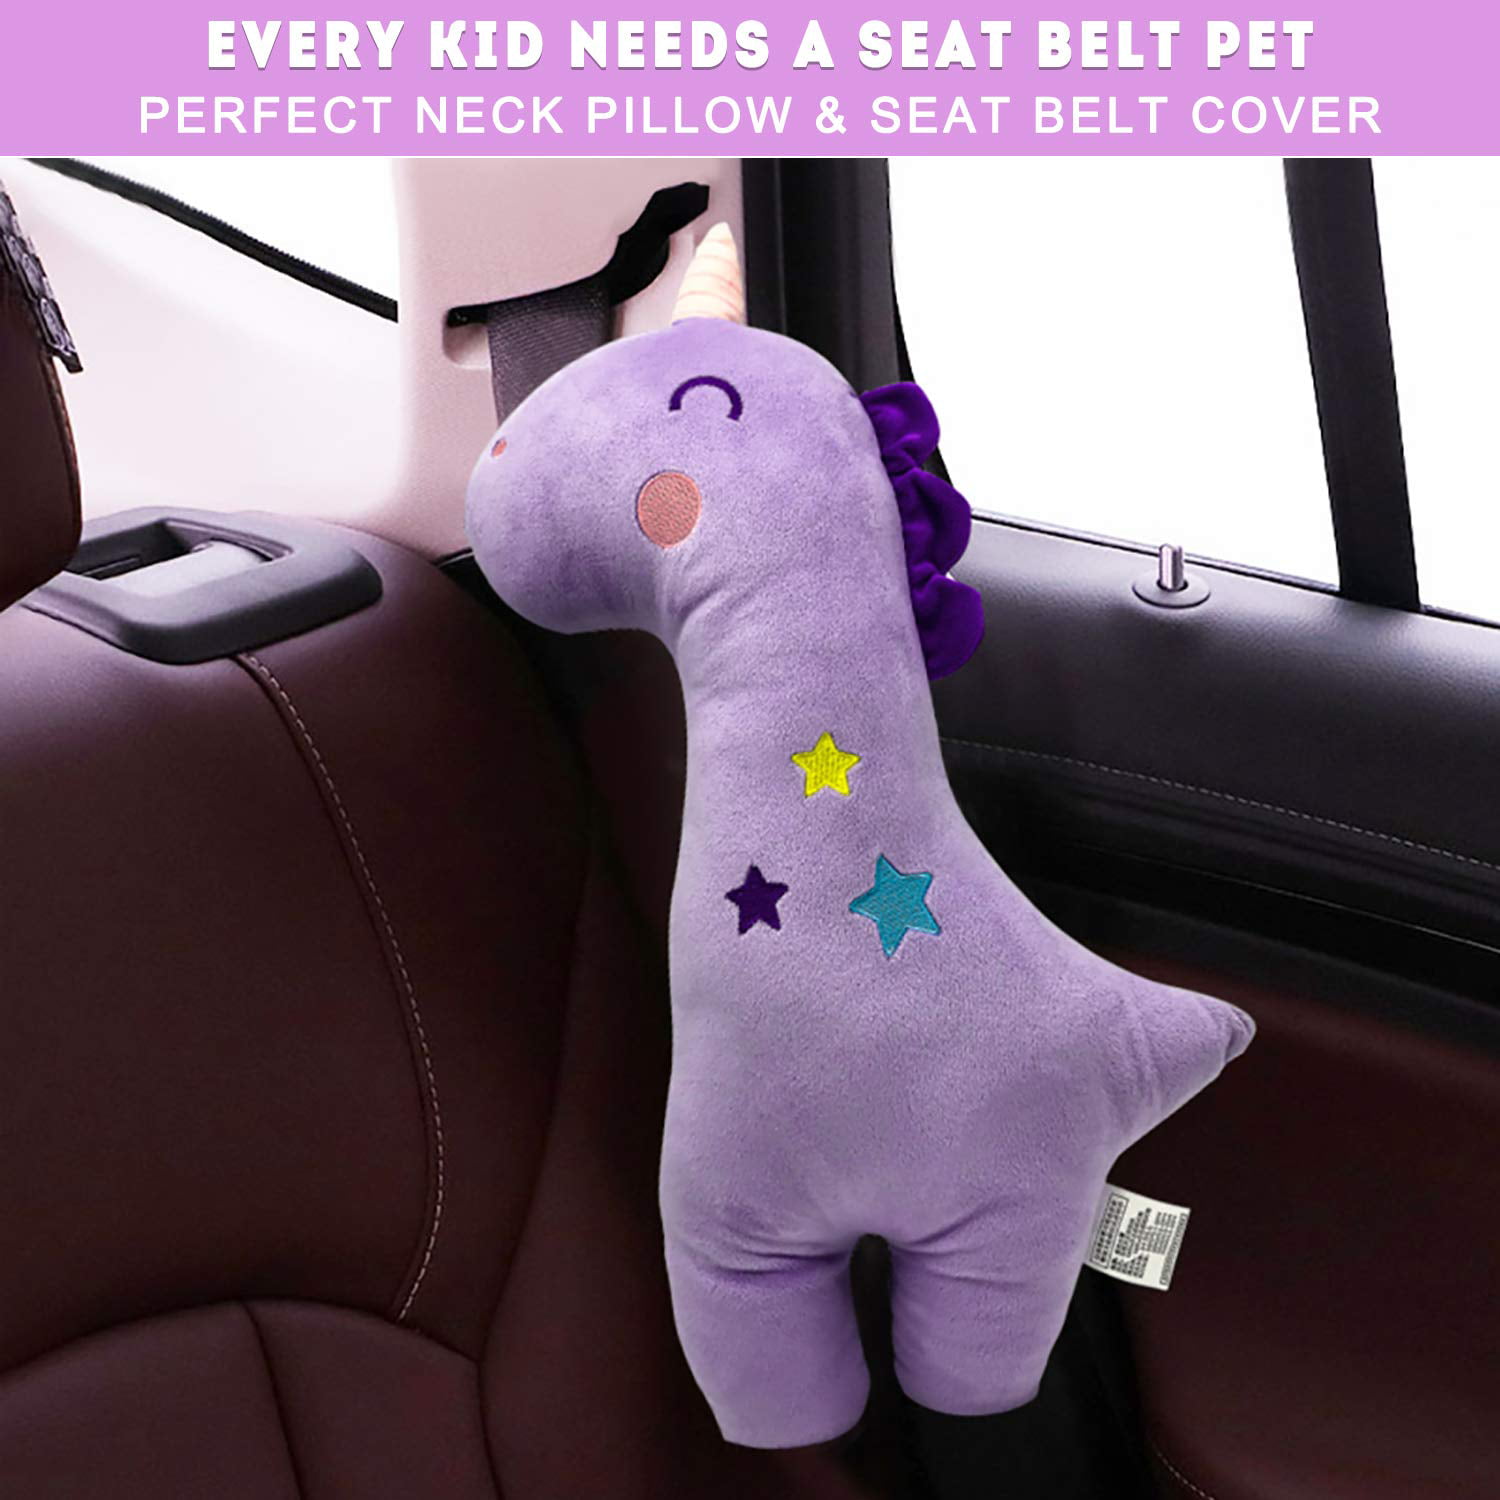 Seatbelt Pillow for Kids Headrest Kids Seatbelt Pillow Neck Beautiful Dinosaur Seatbelt Covers for Kids Stuffed Plush Animal Seat Belt Cover for Kids Seat Belt Cushion Cover for Kids 